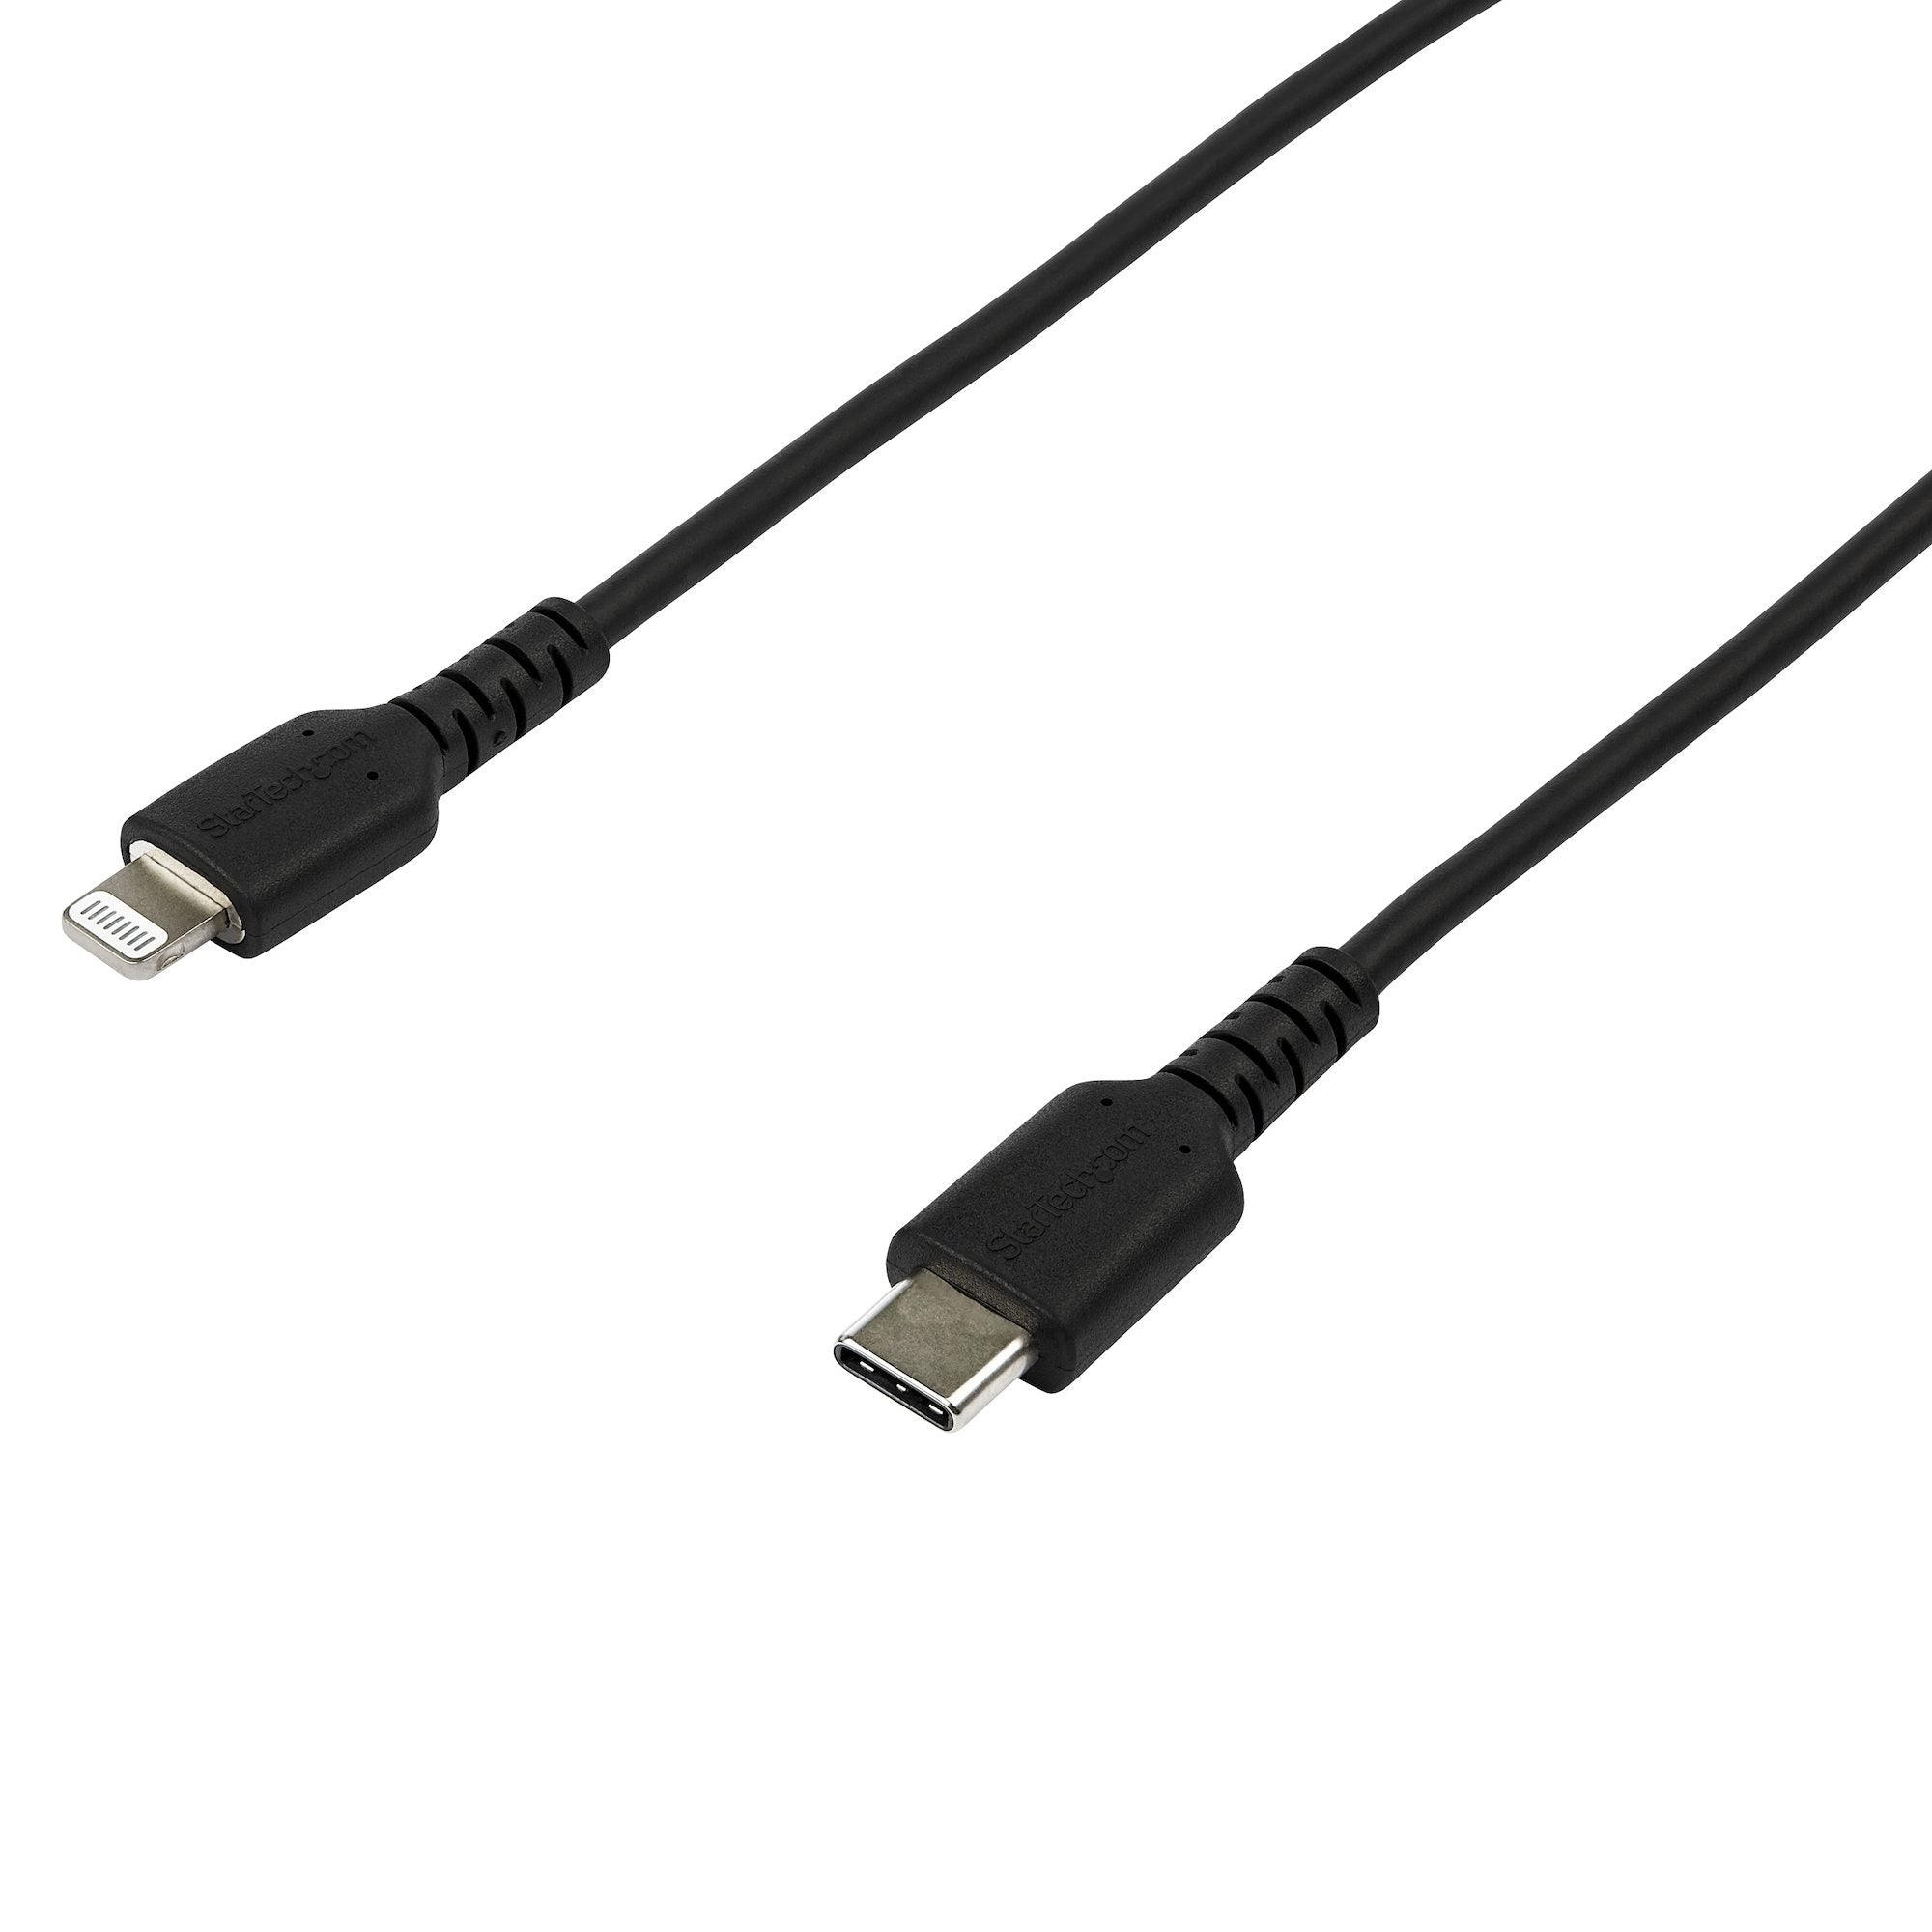 Cable De Carga De 2M Usb-C A Lightning - Color Negro - Cable Usb De Carga Y Alta Resistencia - Certificado Mfi Apple - Startech.Com Mod. Rusbcltmm2Mb